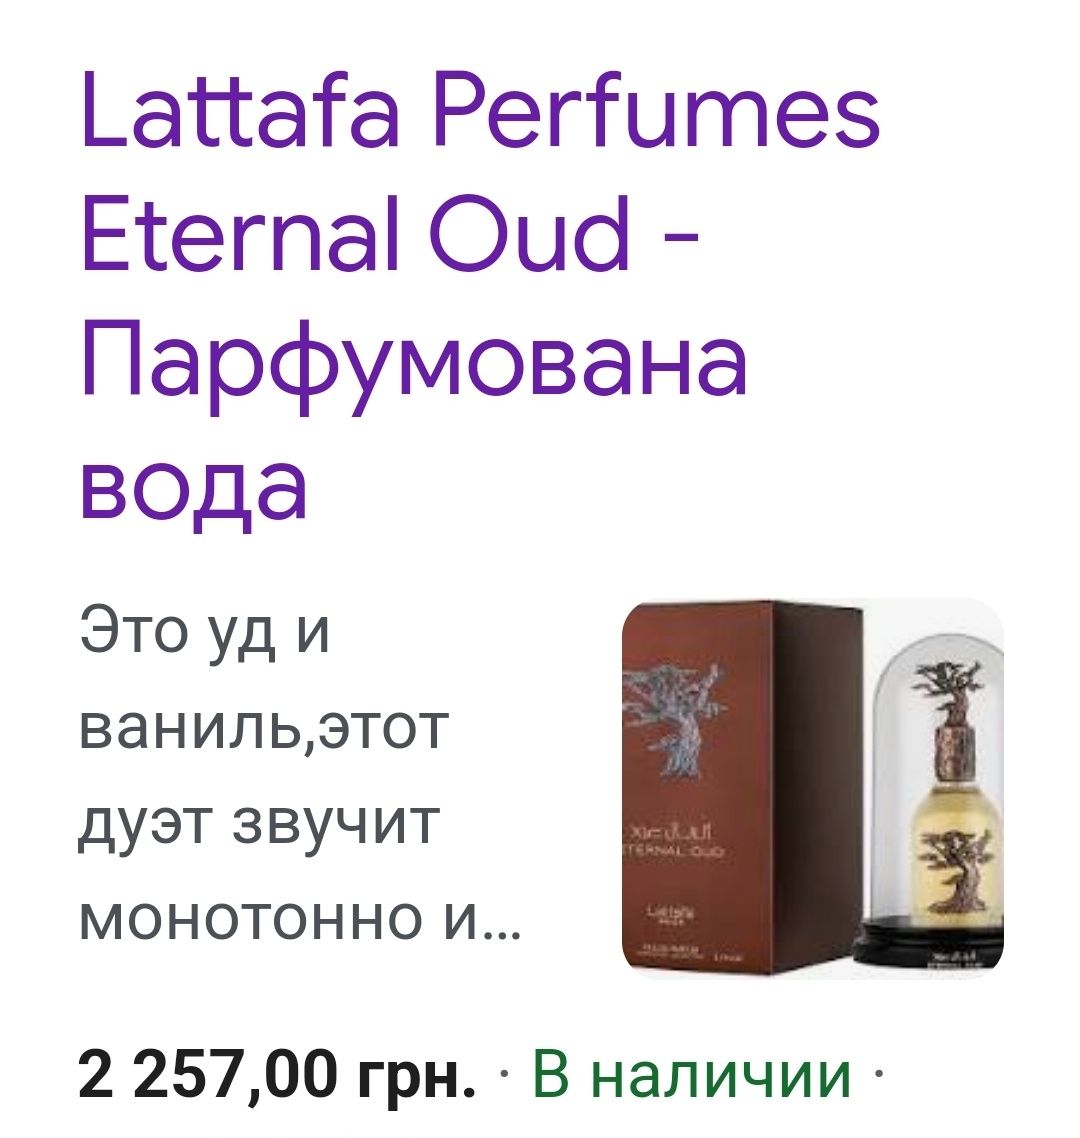 Lattafa Eternal Oud
Lattafa Perfumes Eternal Oud
Lattafa Perf